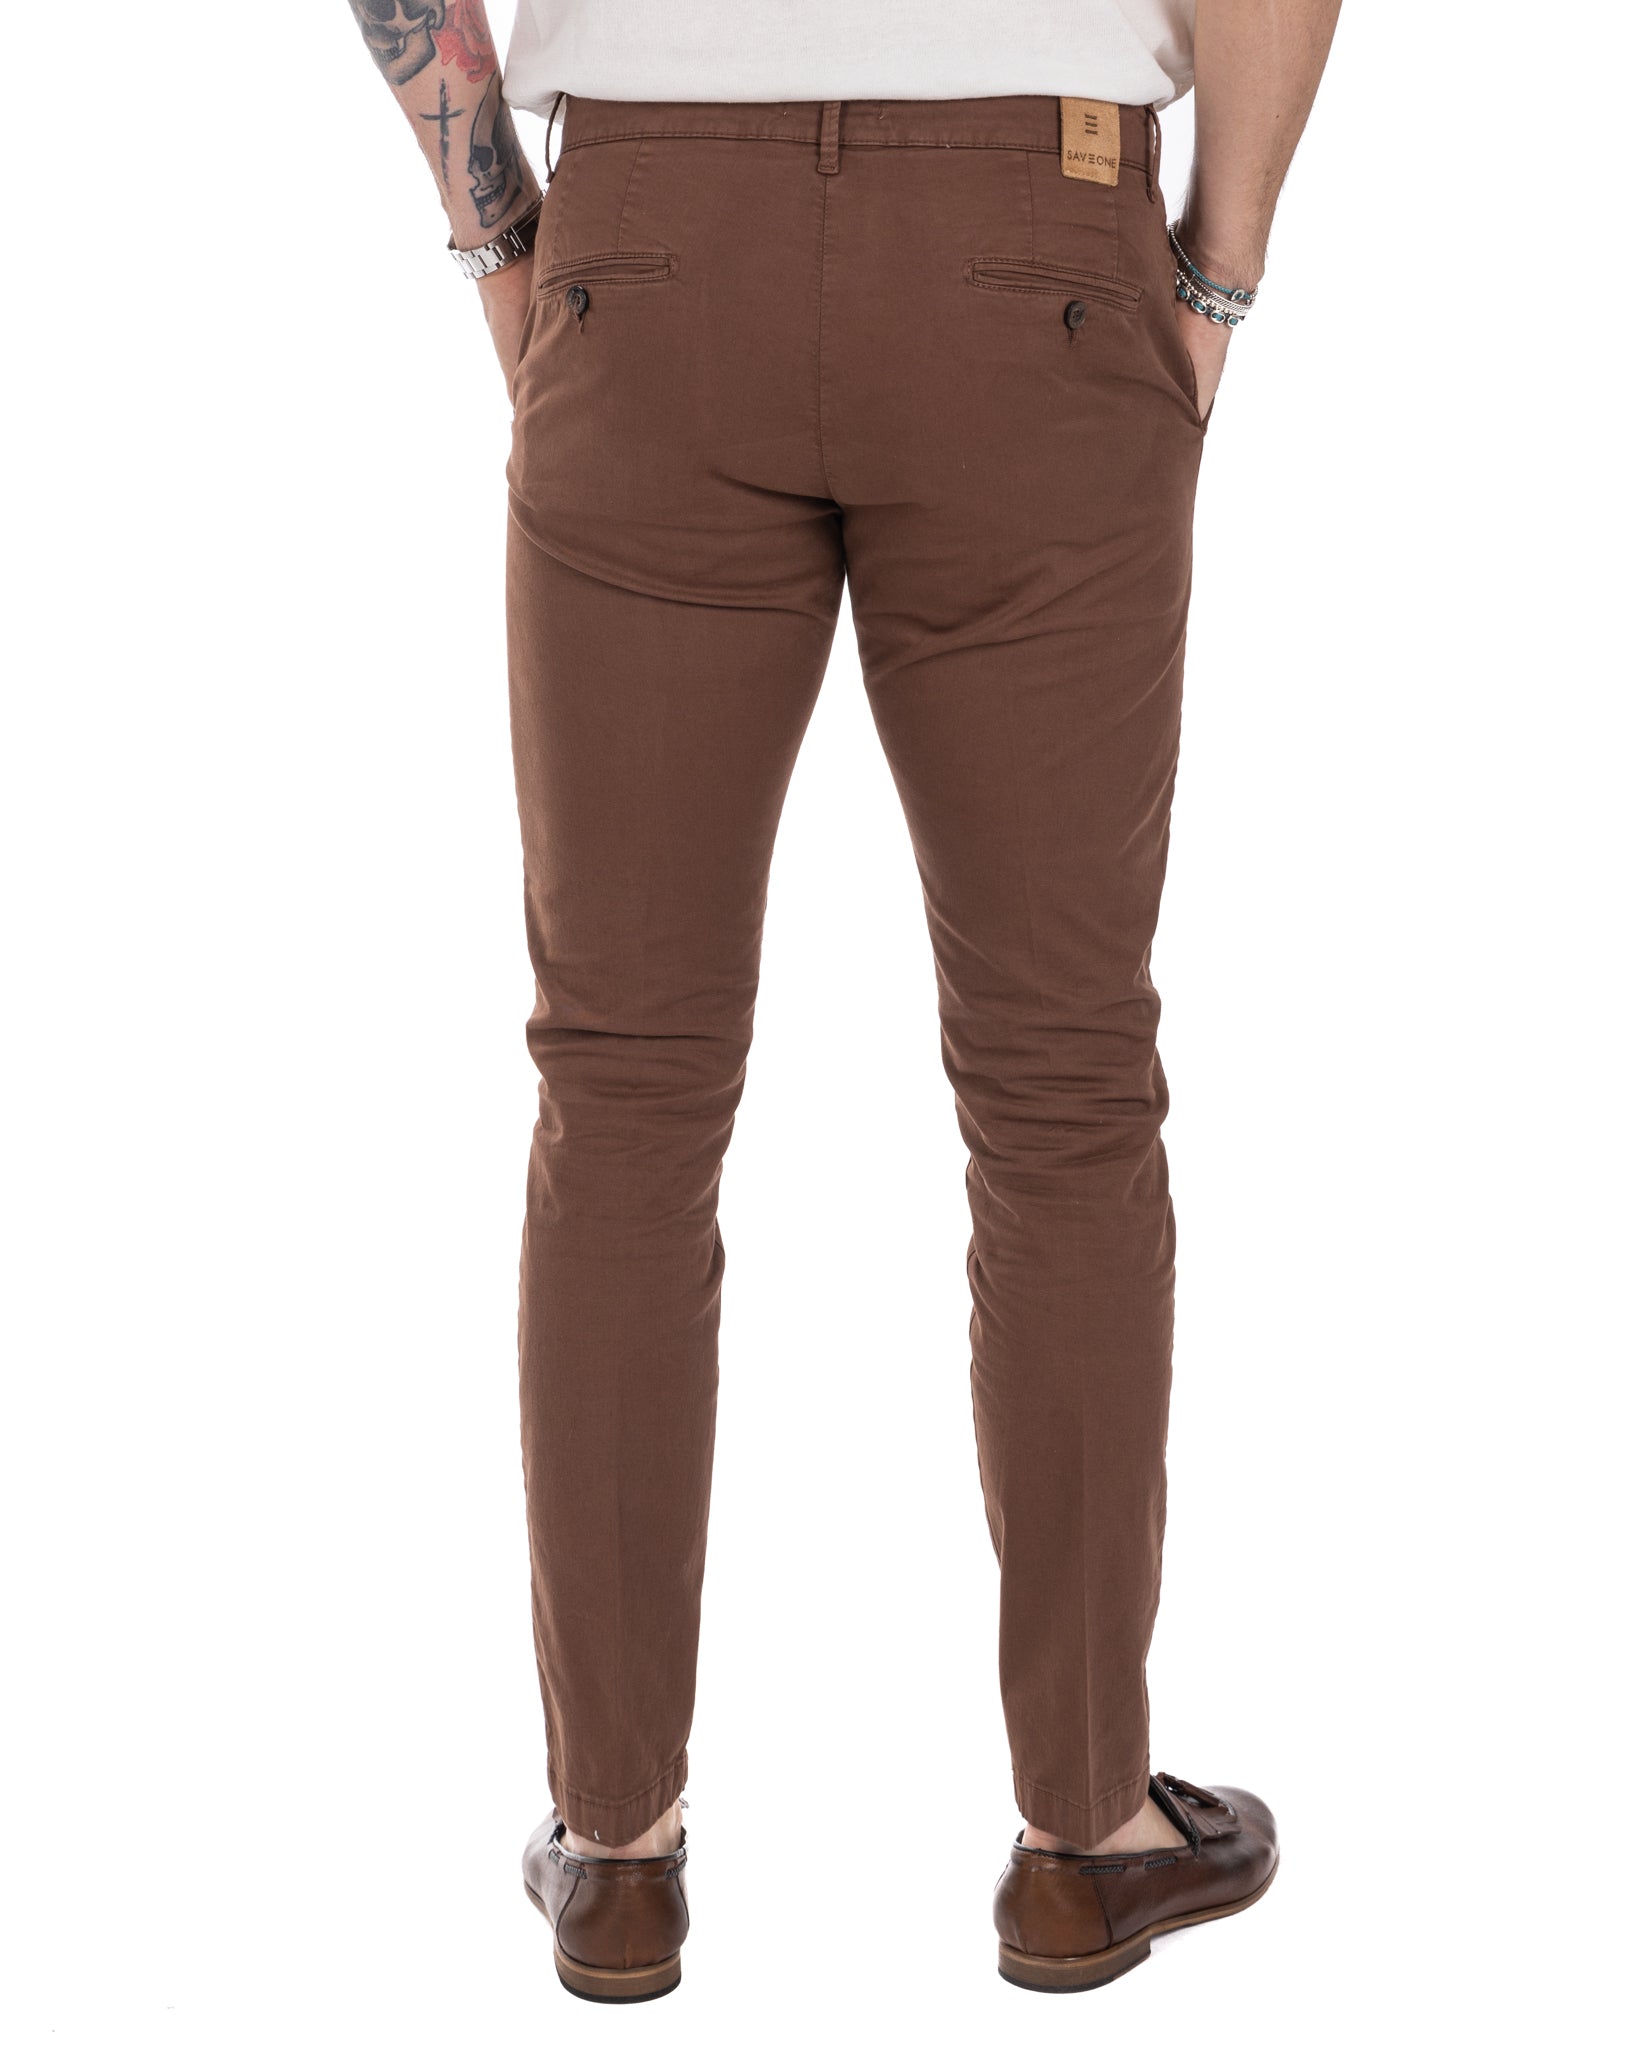 Frank - pantalon marron basique